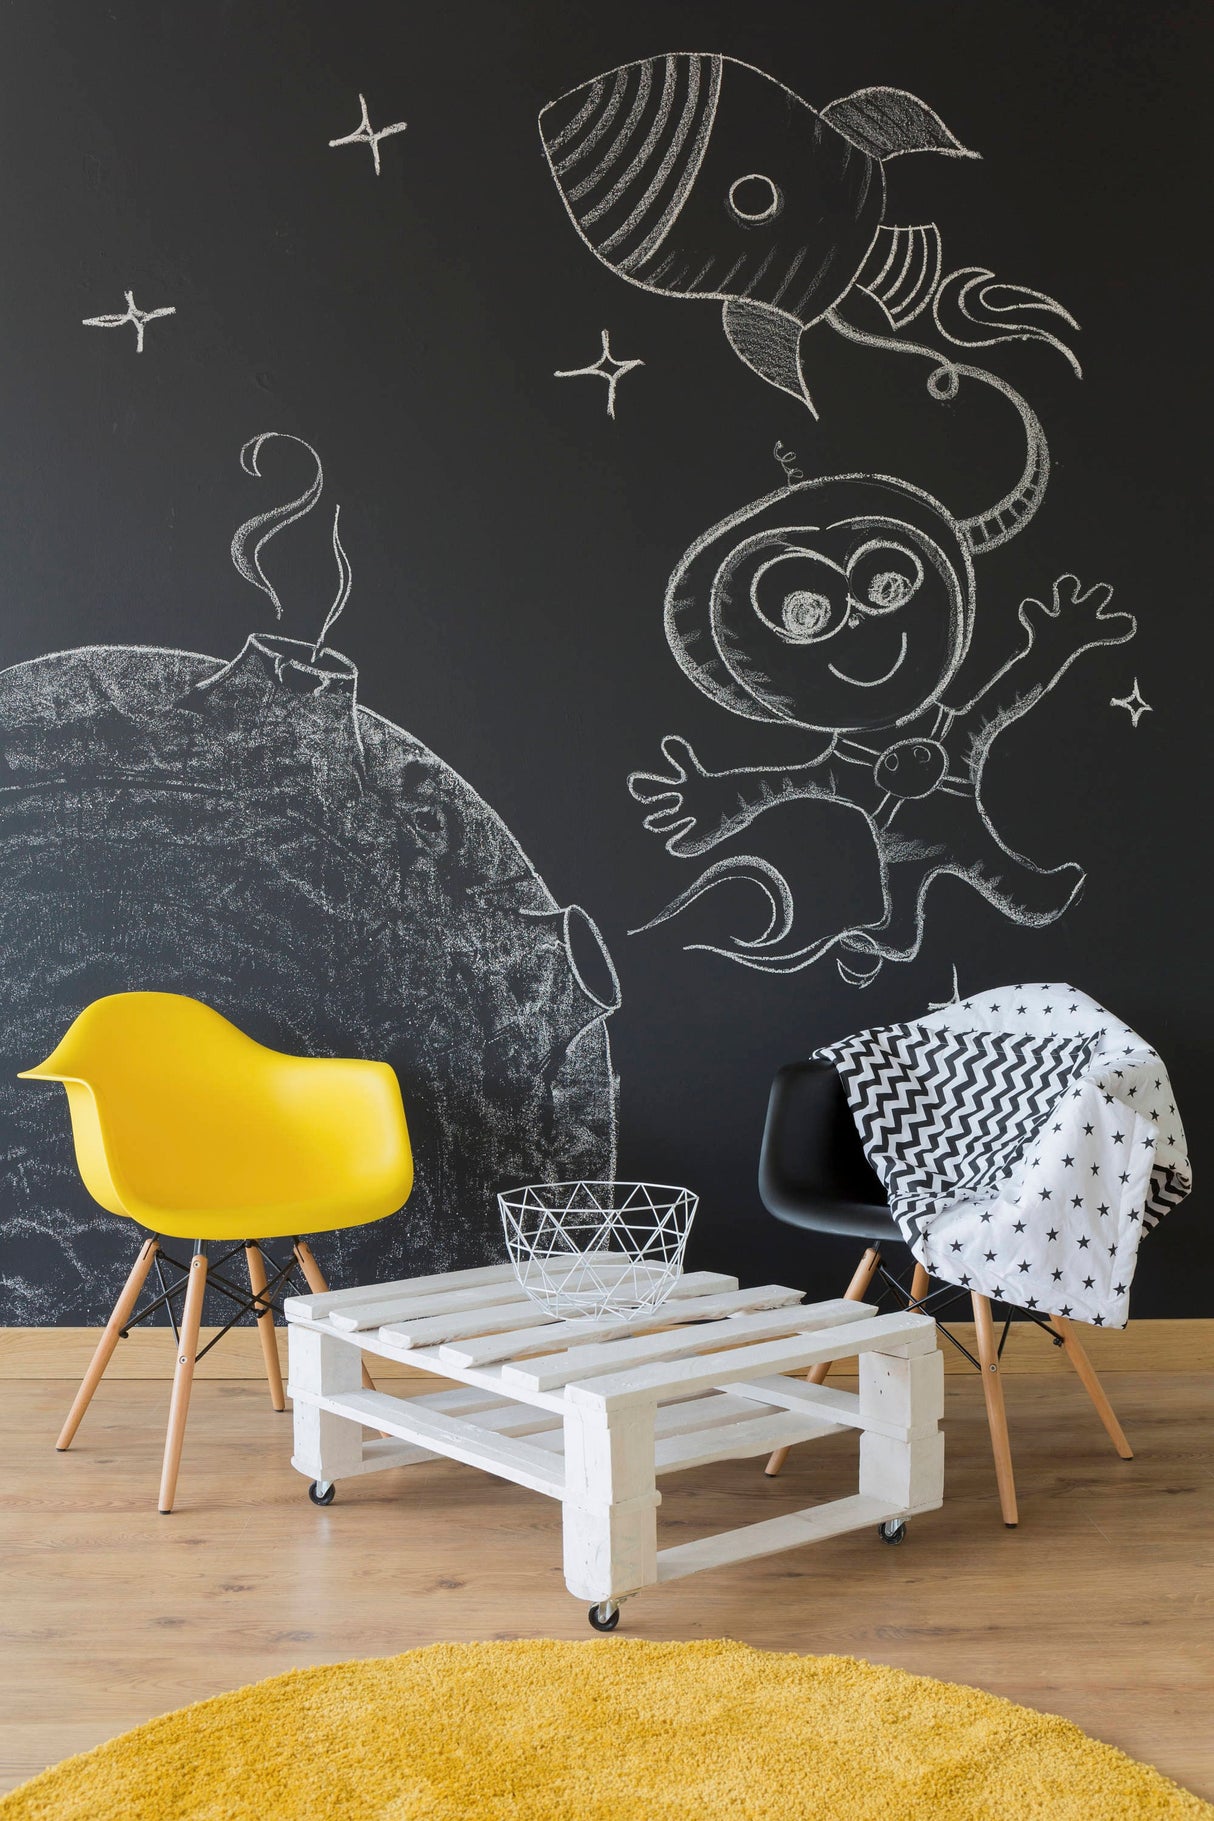 Chalkboard Wall Sticker - Large Chalk Board Decal For Kitchen Classroom Door Menu Decor